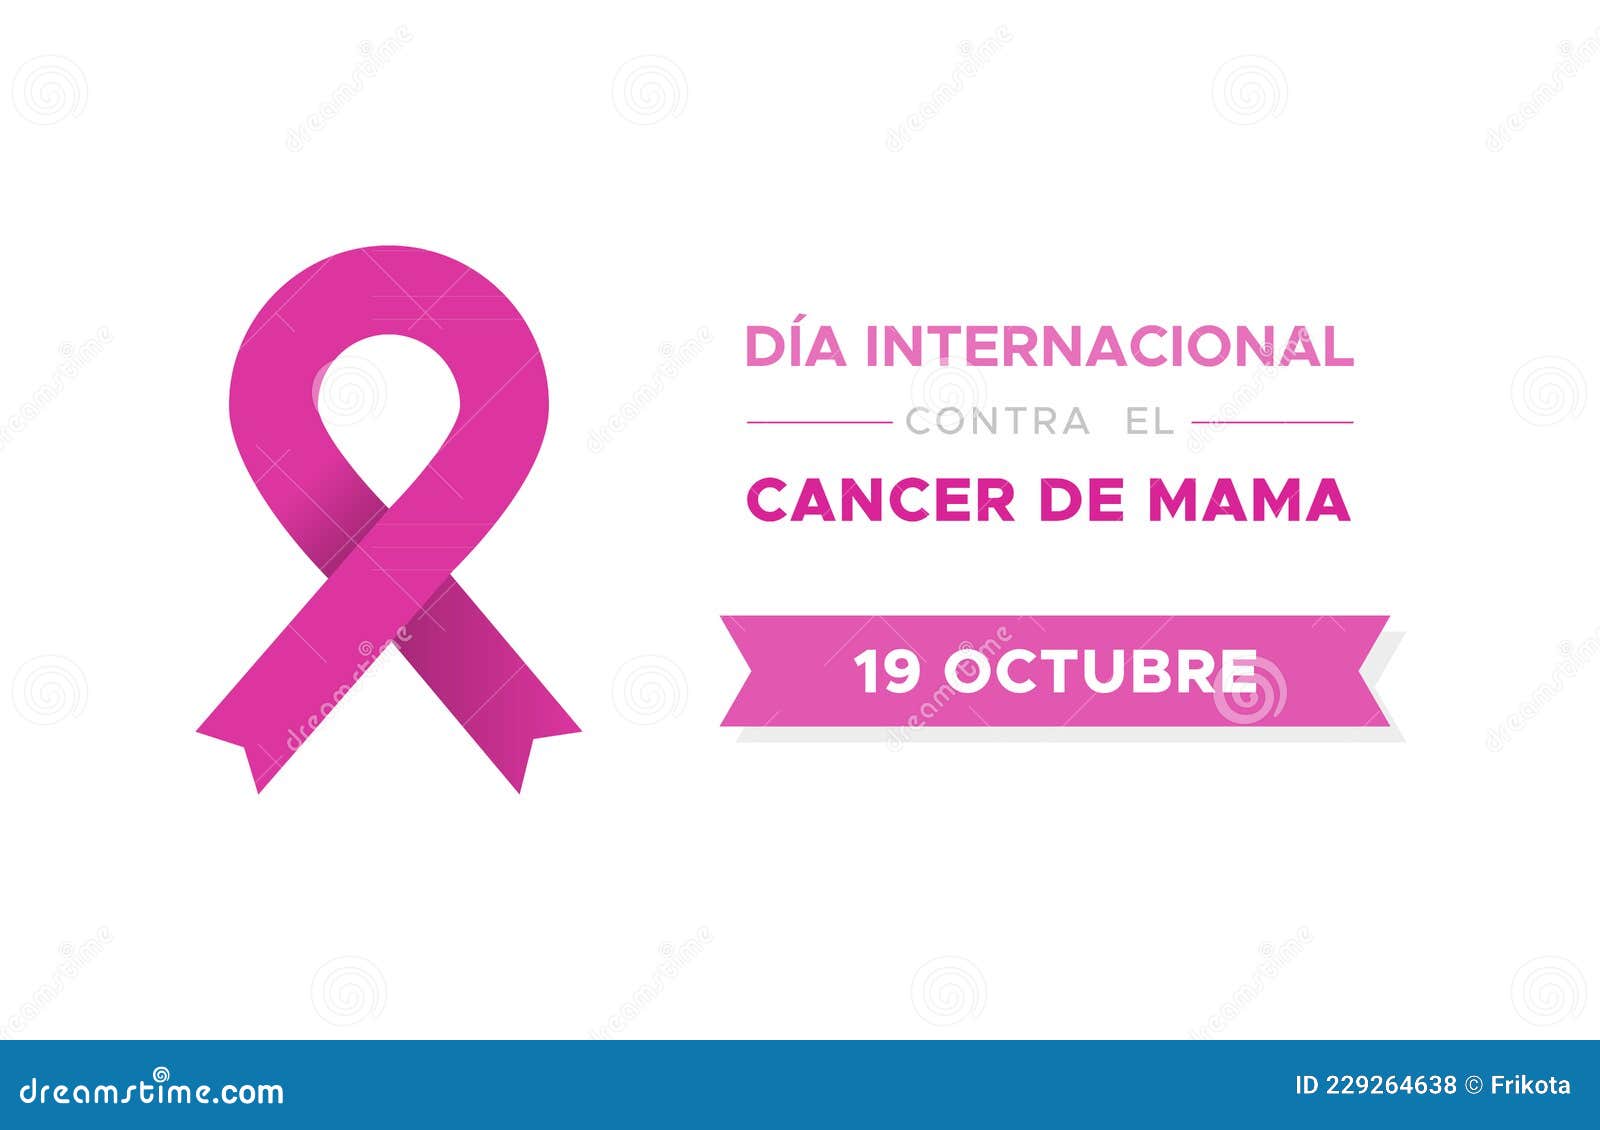 international day of breast cancer in spanish. dia internacional contra el cancer de mama.  , flat 